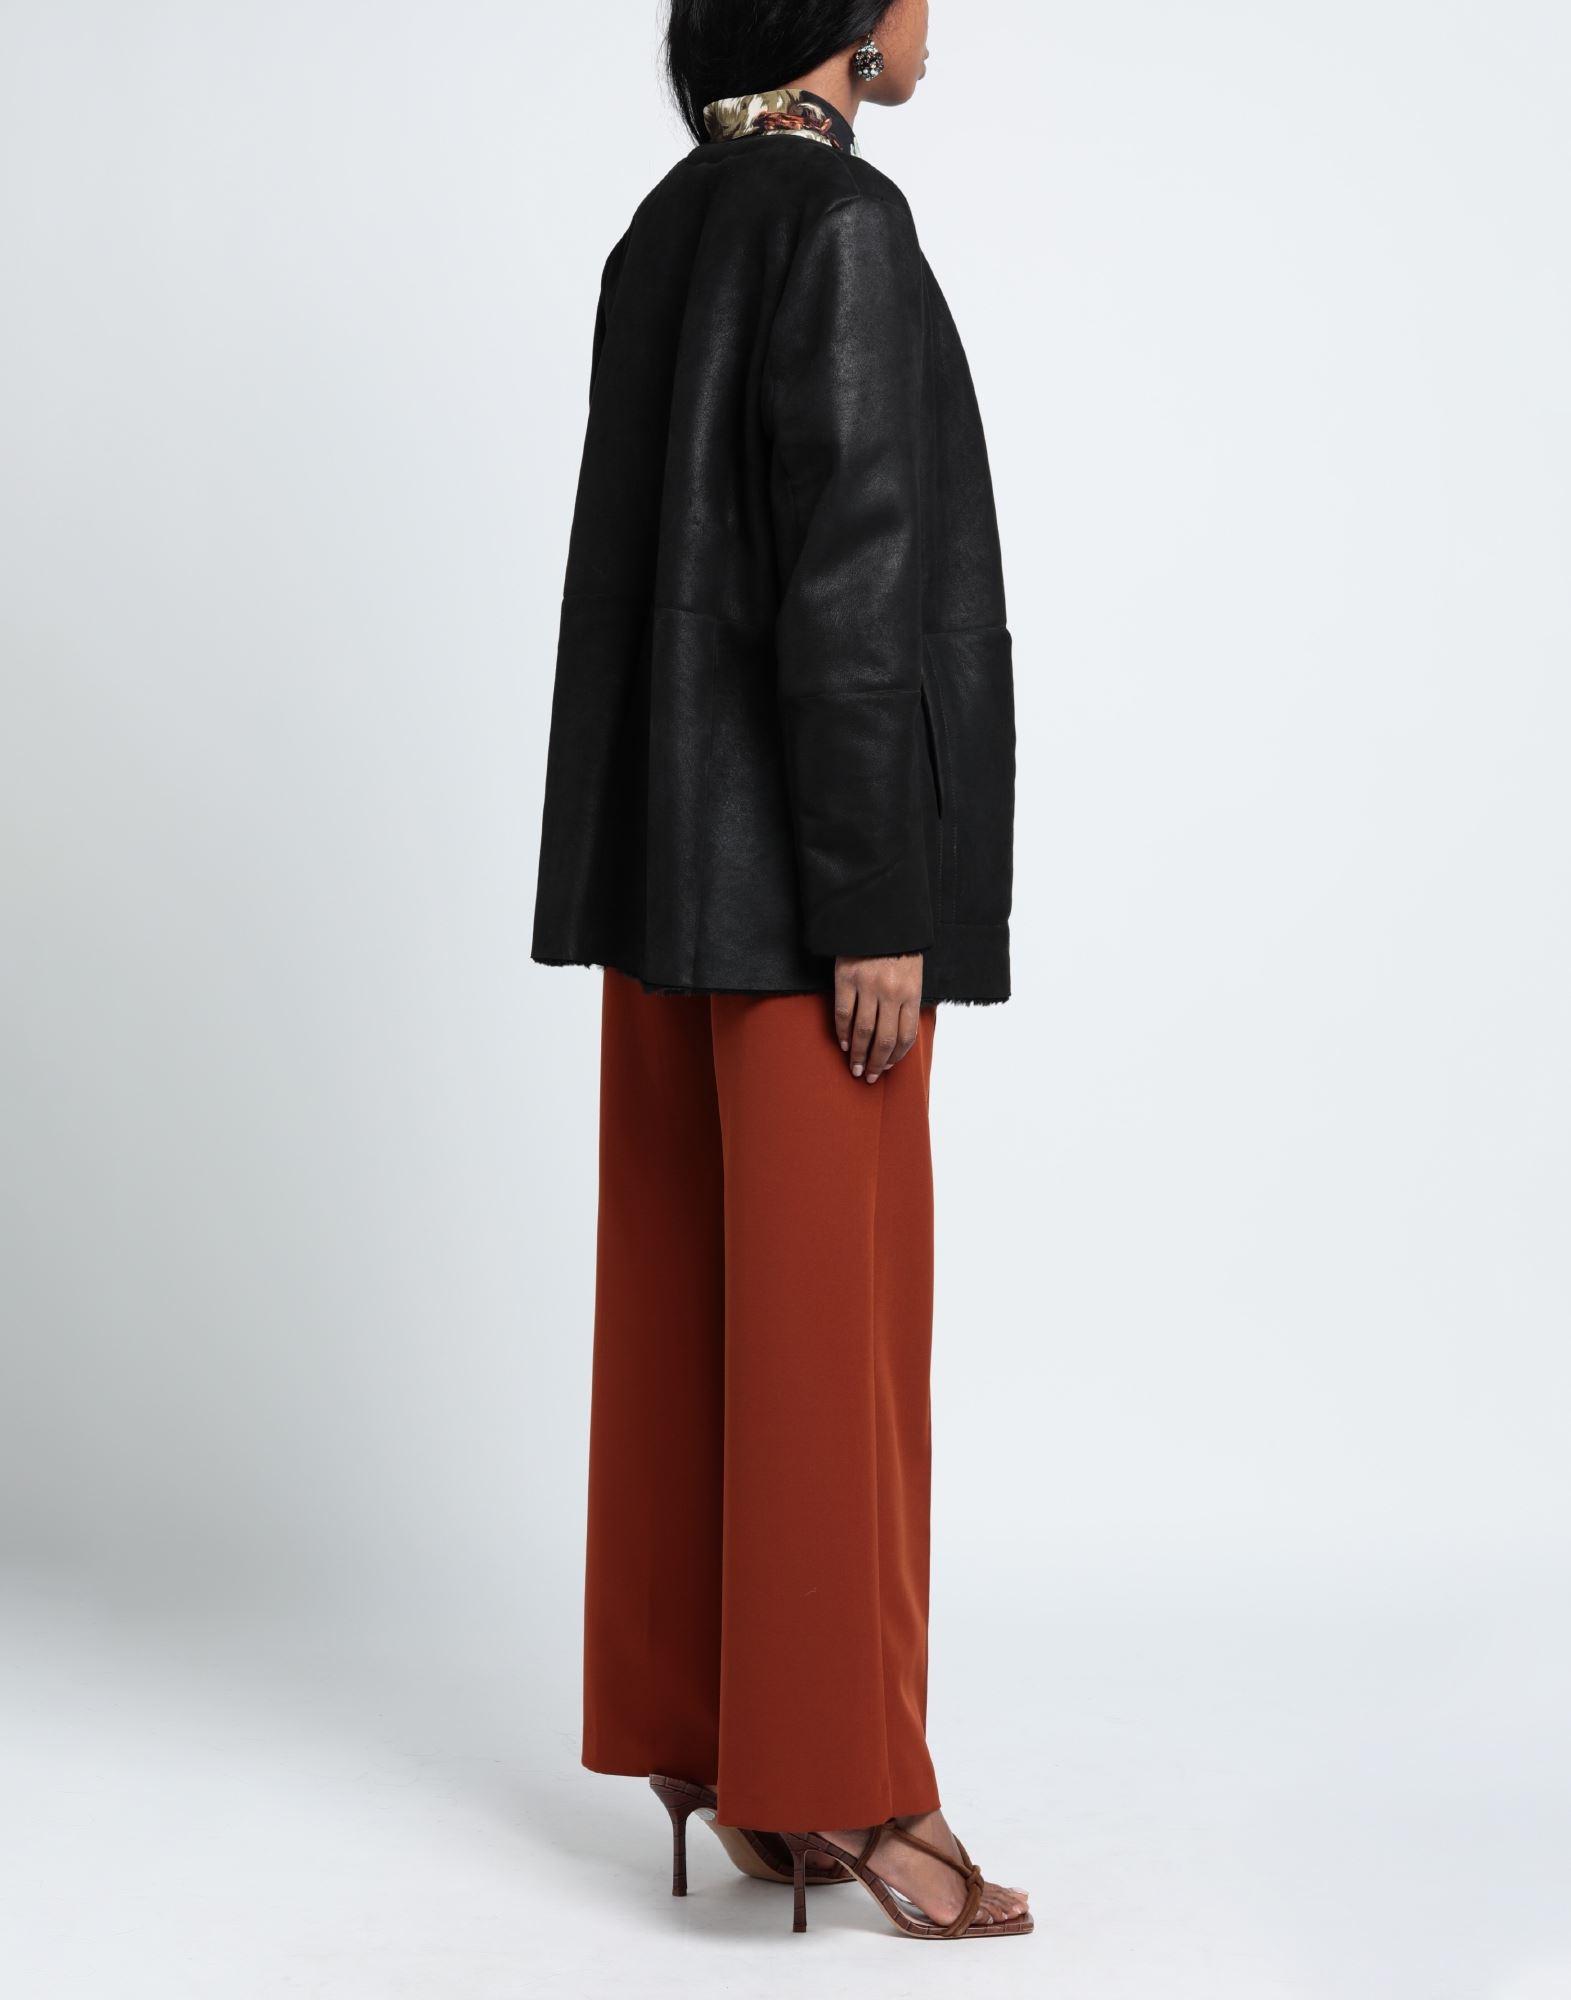 Lanvin Leather Coat in Black - Lyst